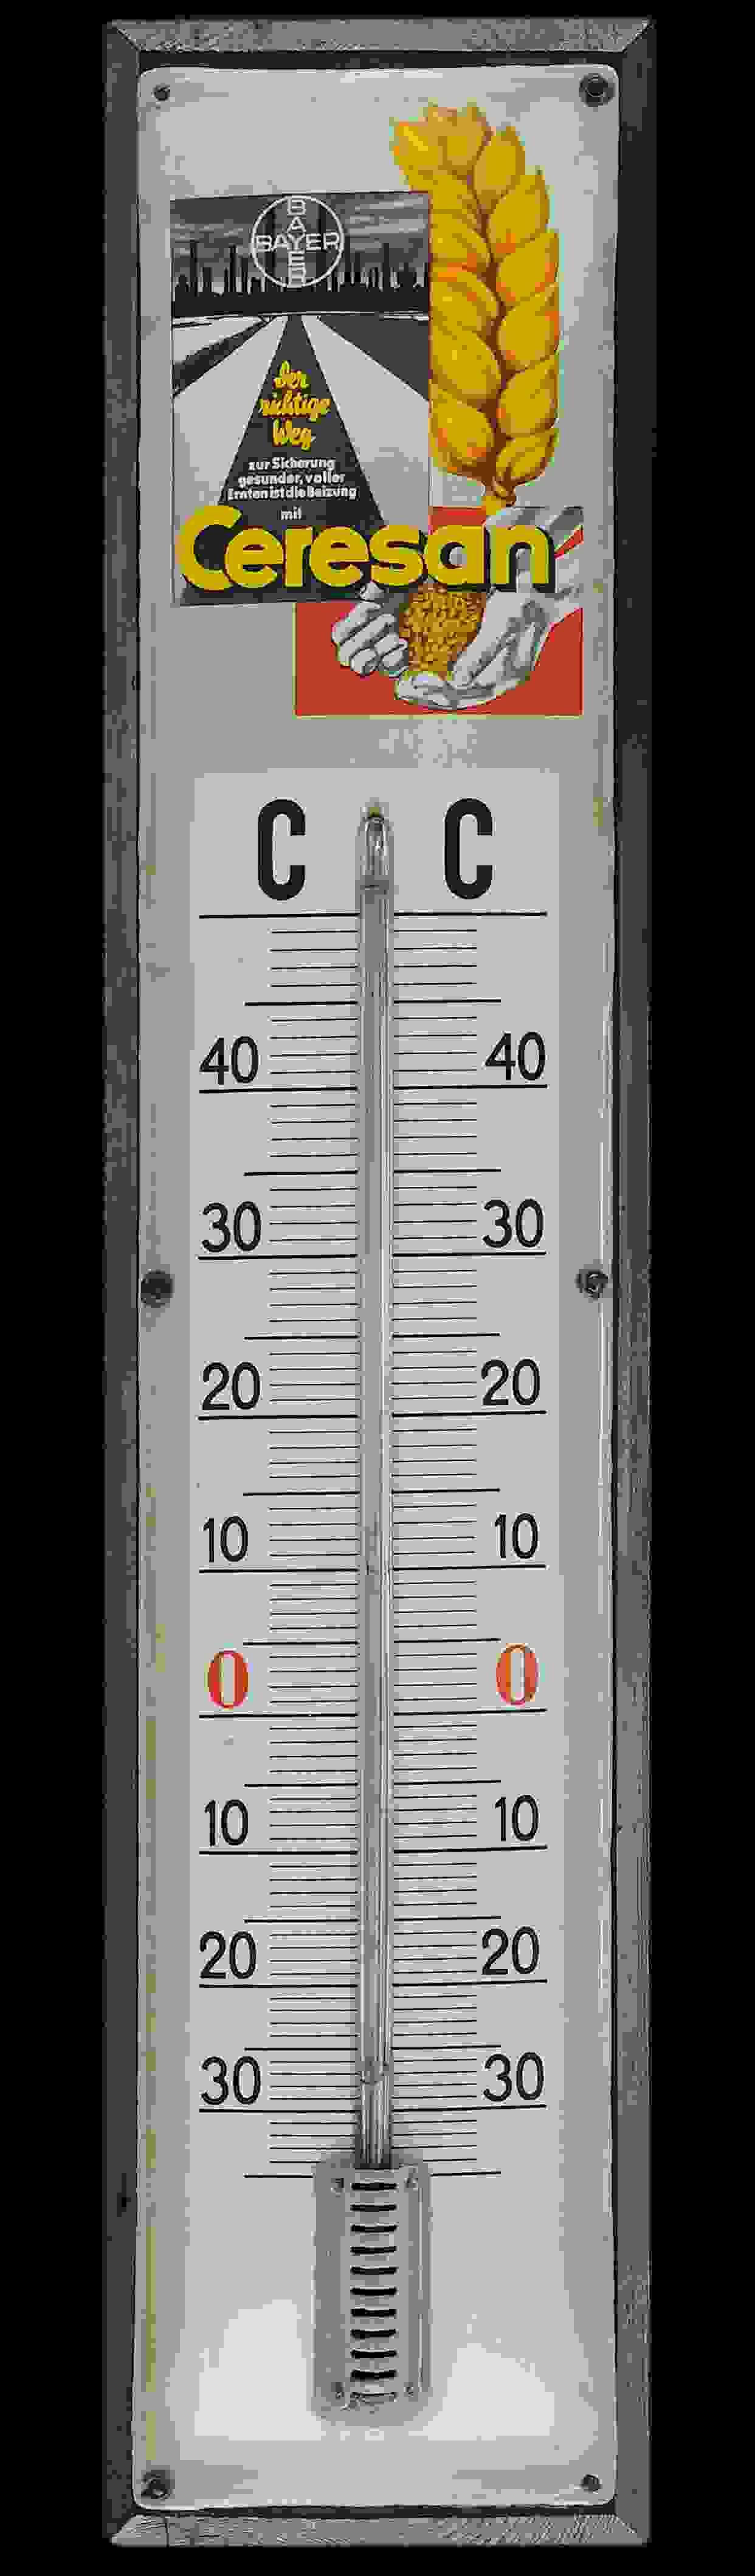 Ceresan Thermometer 